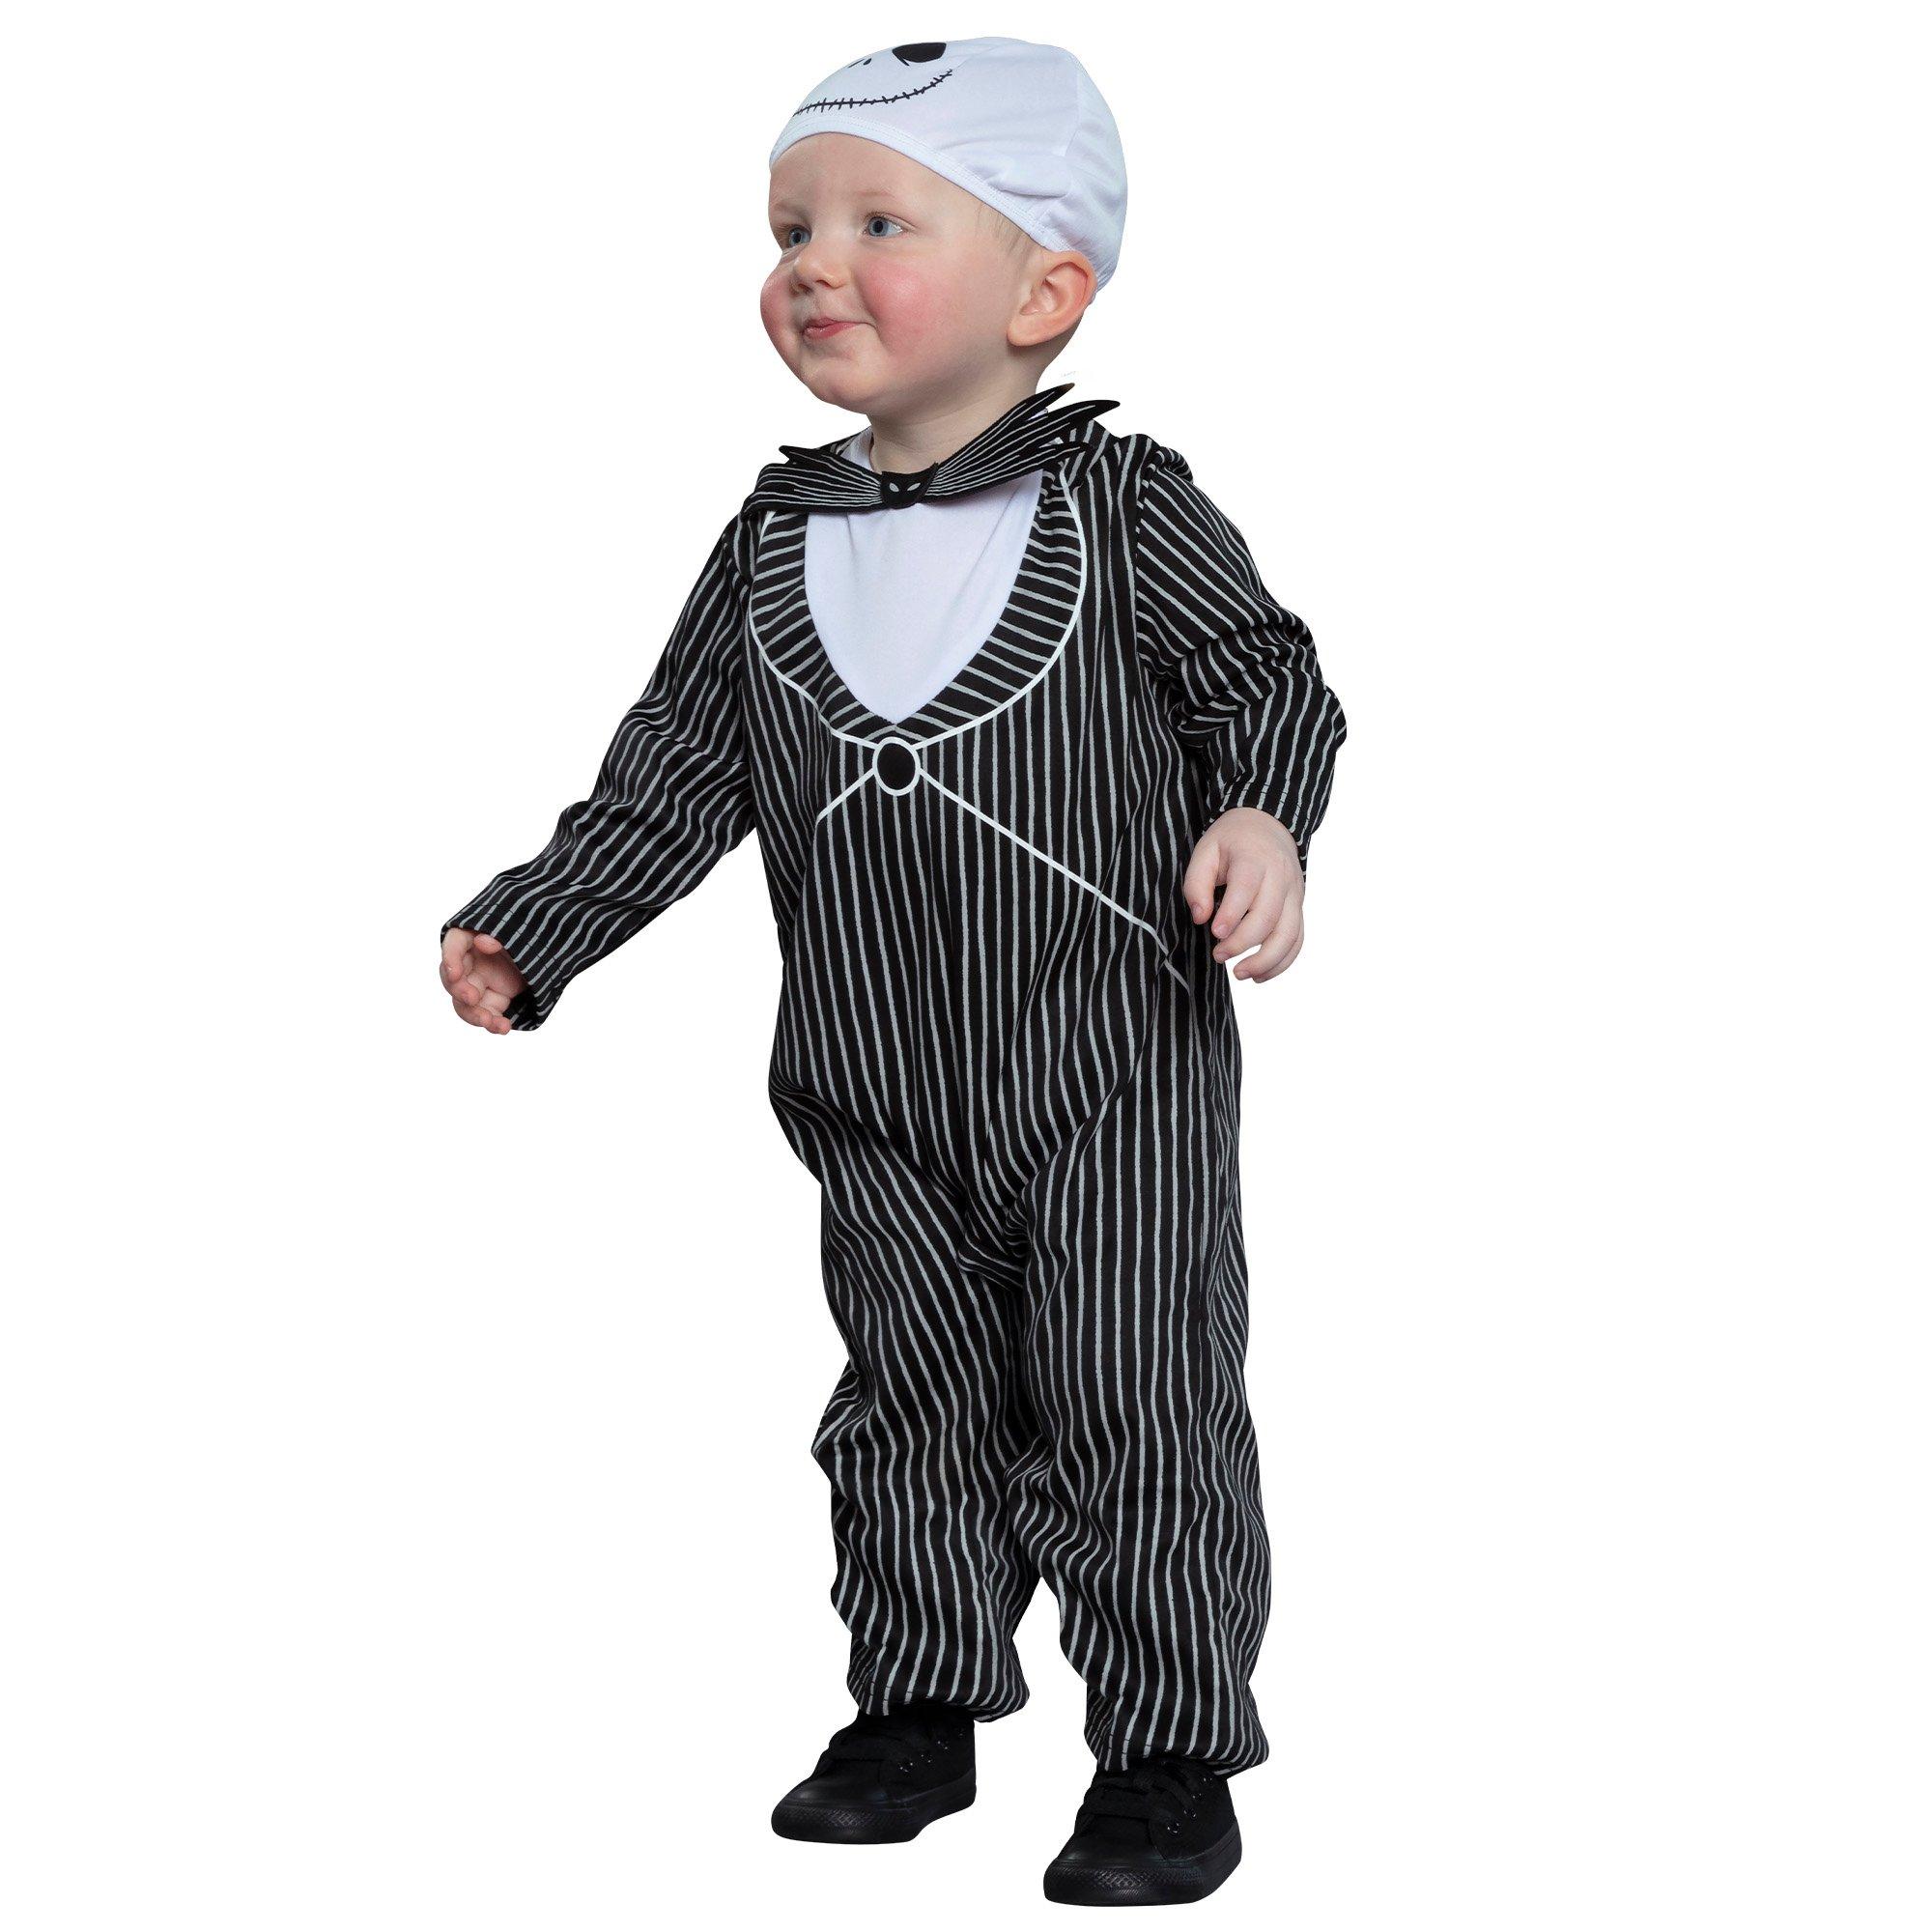 Baby Jack Skellington Costume - The Nightmare Before Christmas